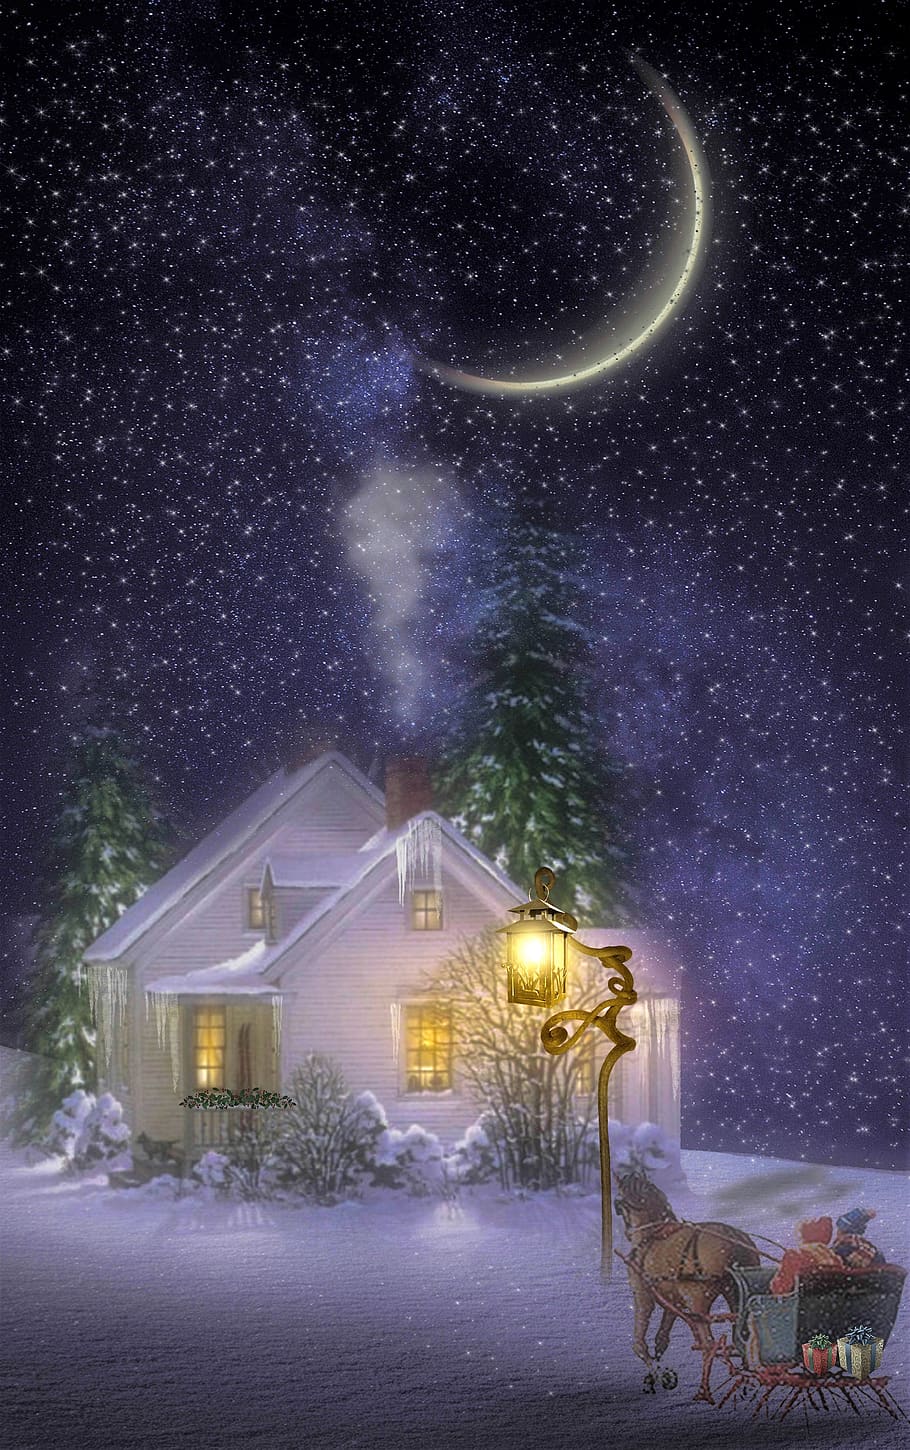 fantasy, winter night, slide, wintry, fairytale, the winter's tale, dreamy, nature, romance, snow